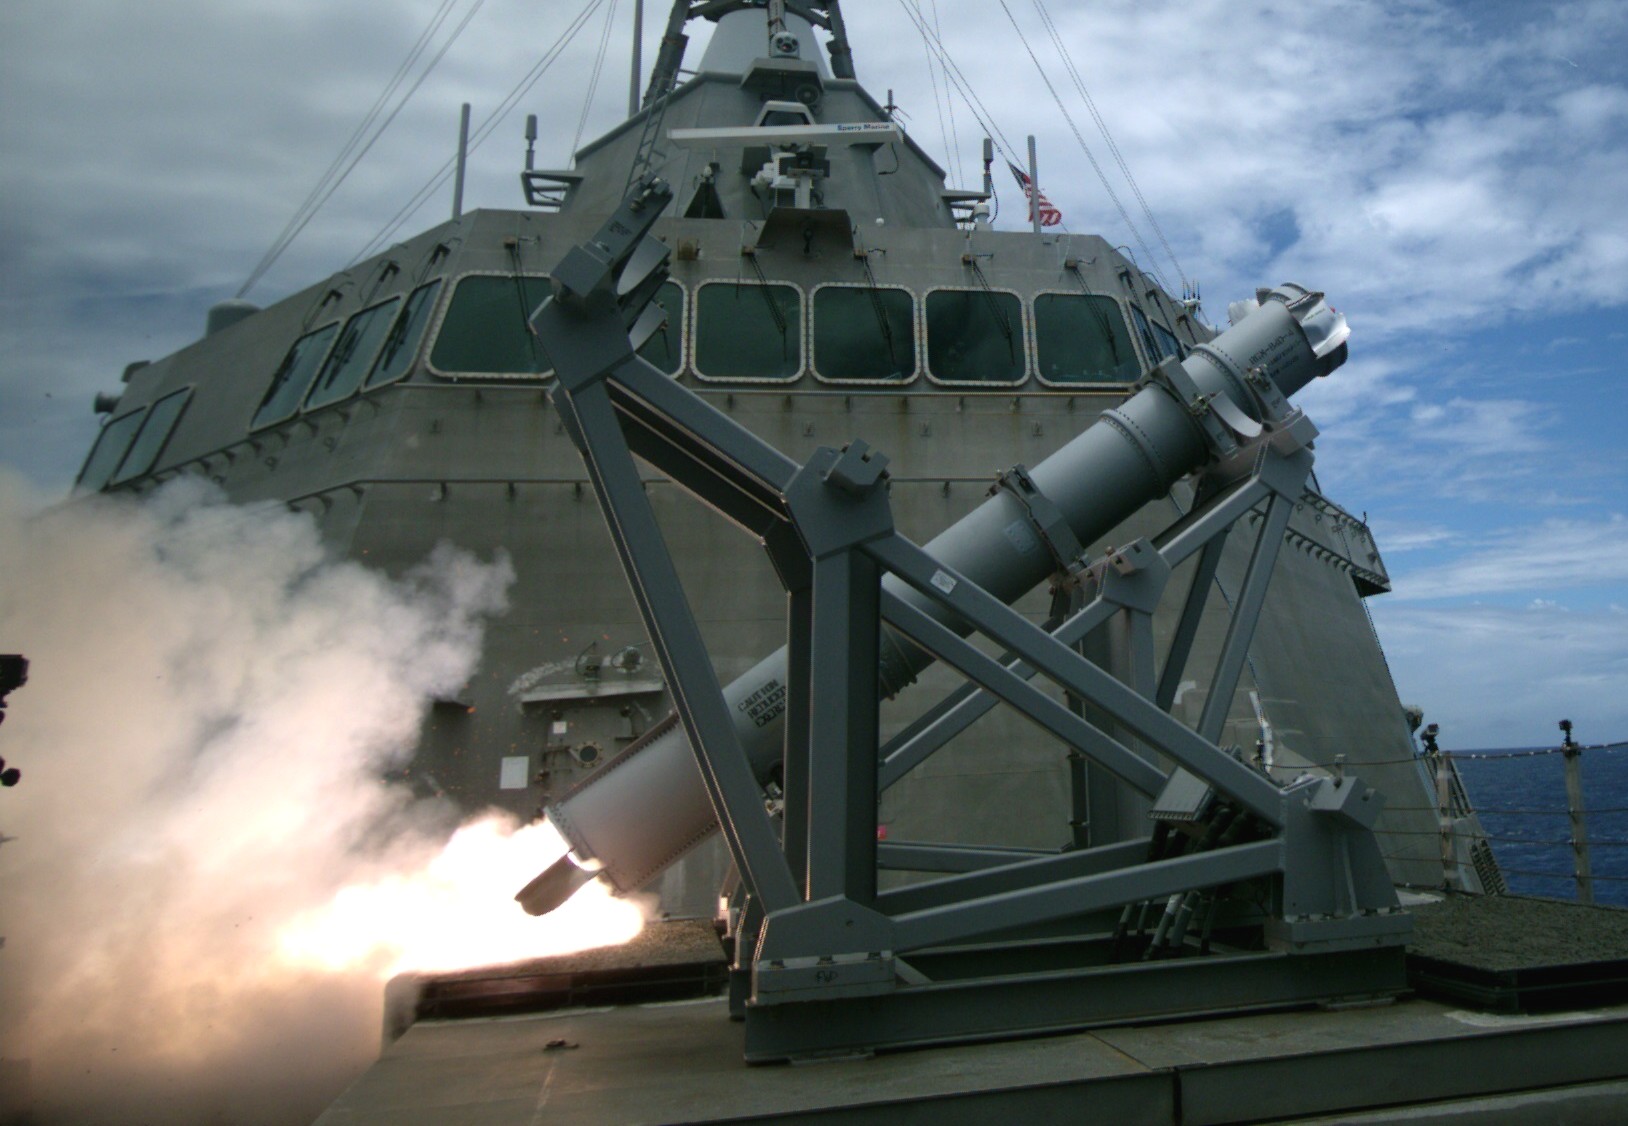 lcs-4 uss coronado independence class littoral combat ship us navy 11 harpoon ssm launching